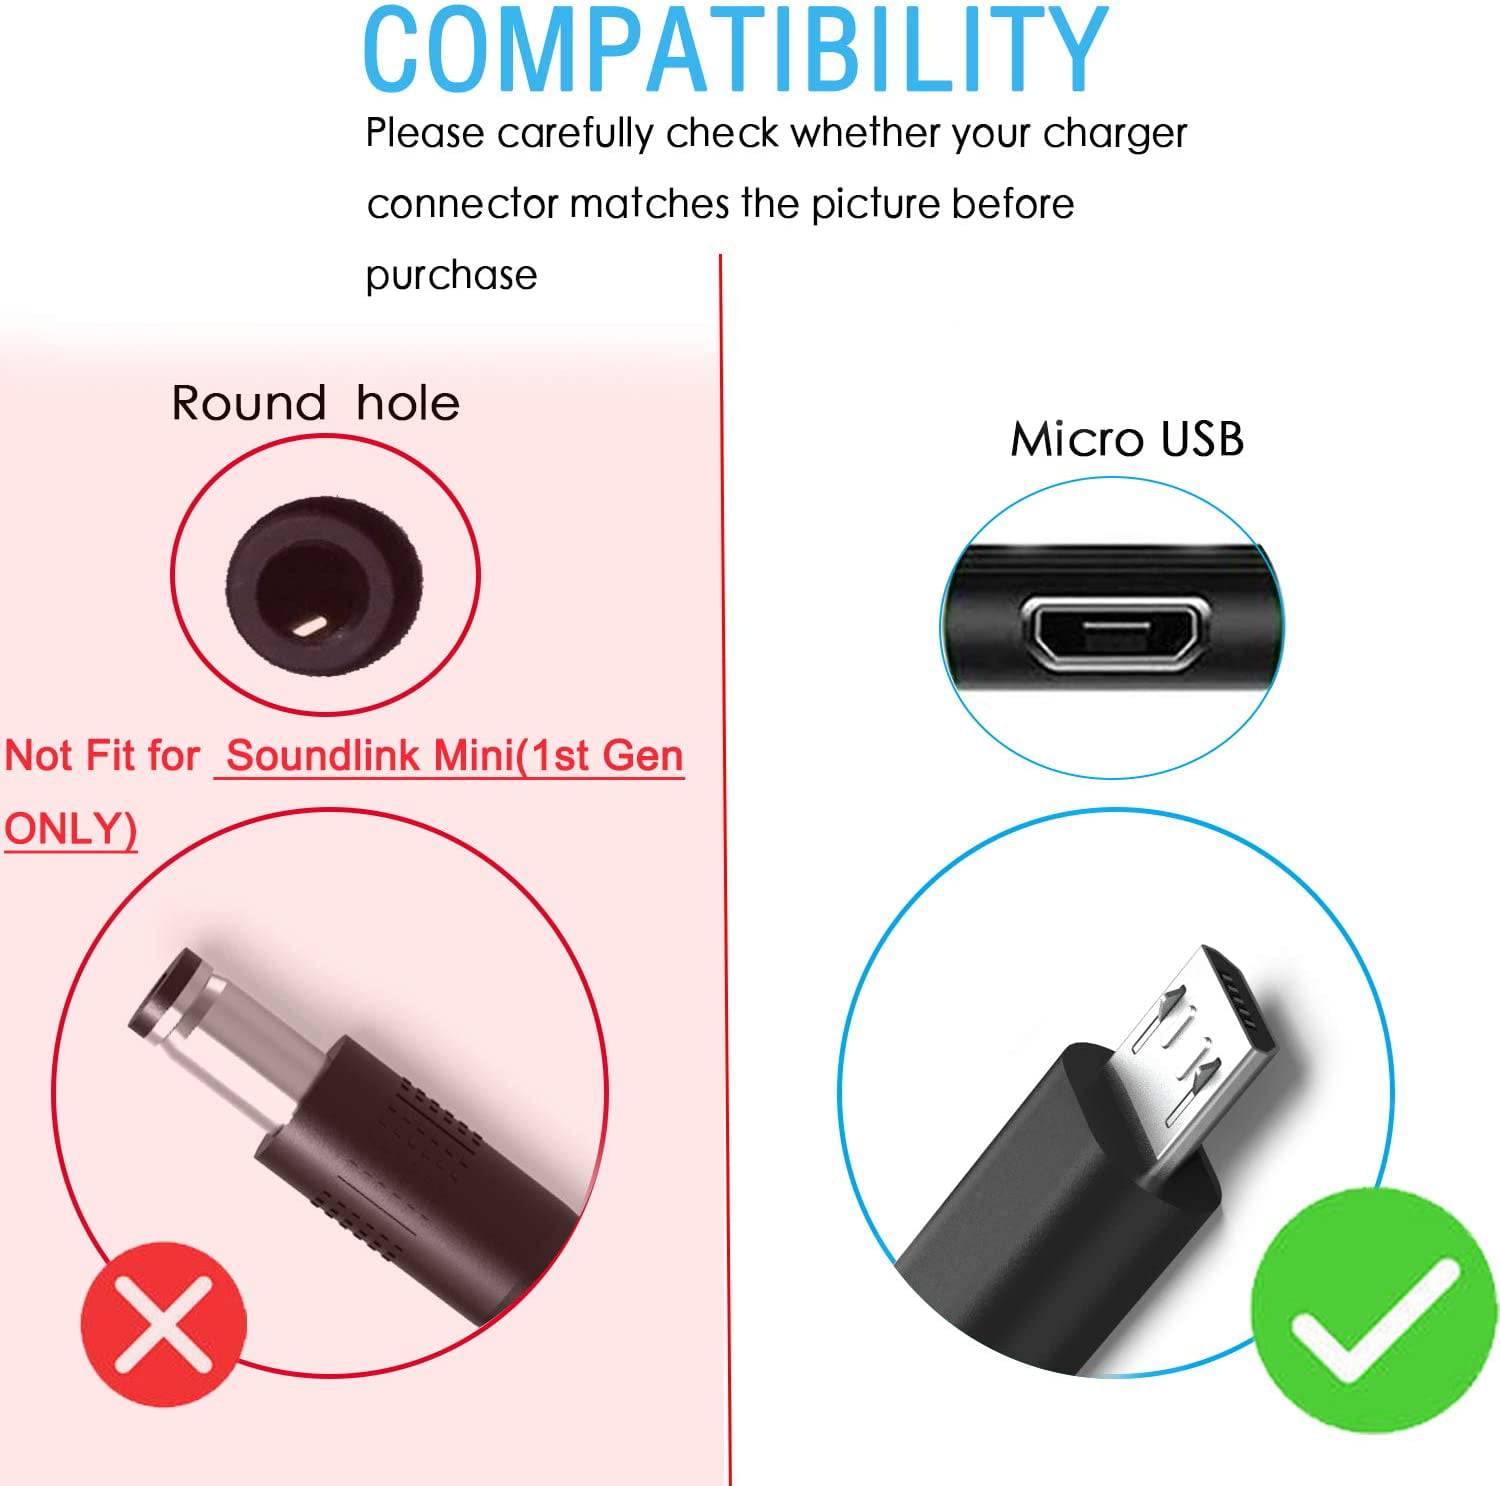 1m/3.3ft Keple USB Charger Cable Compatible with Bose SoundLink Colour/SoundLink Bluetooth Speaker